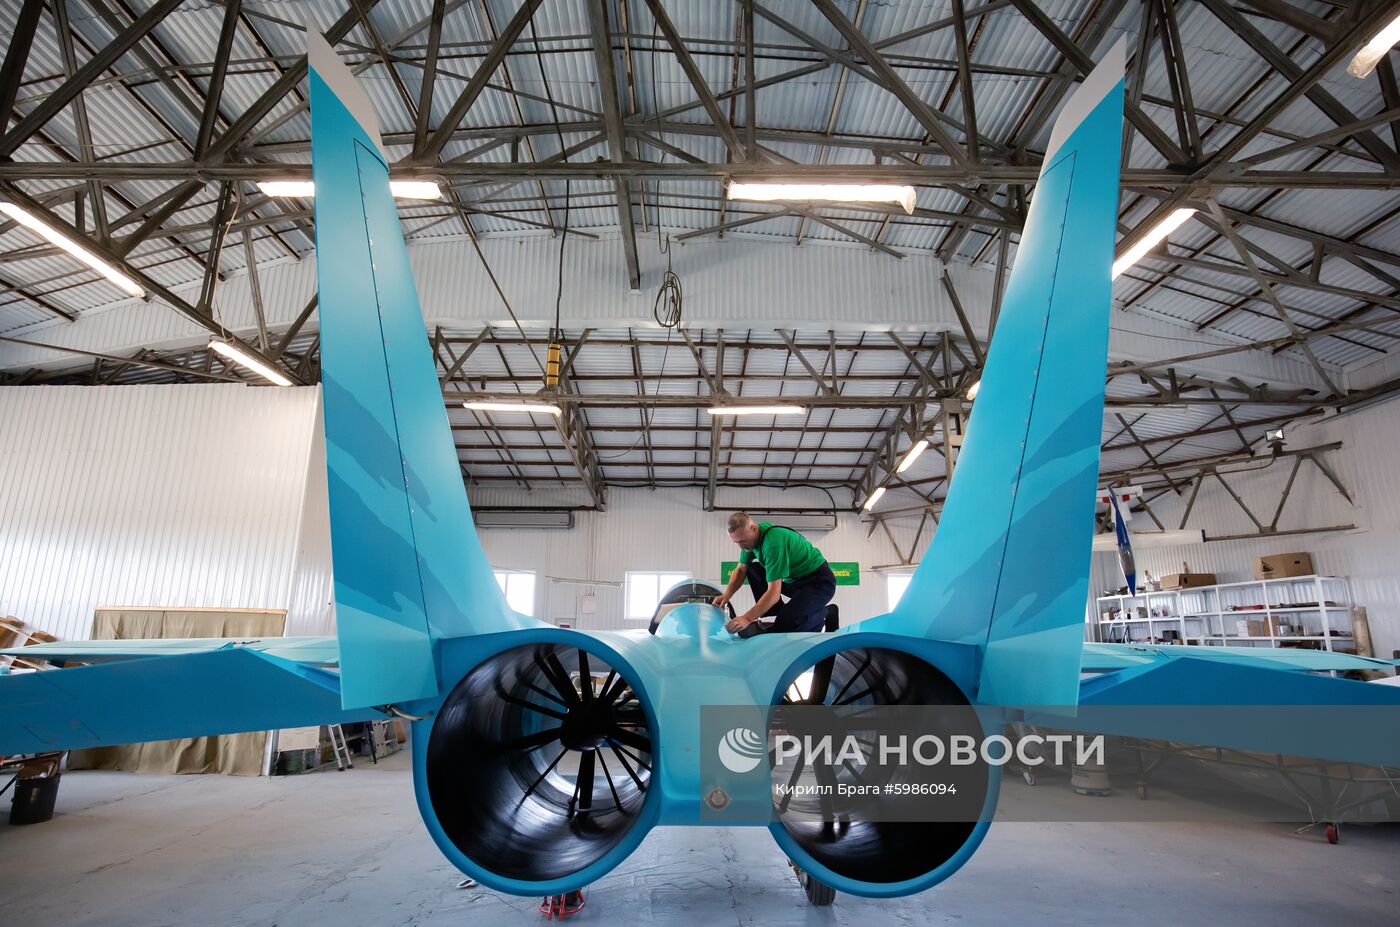 Самолет малой авиации PJ-II "Dreamer"